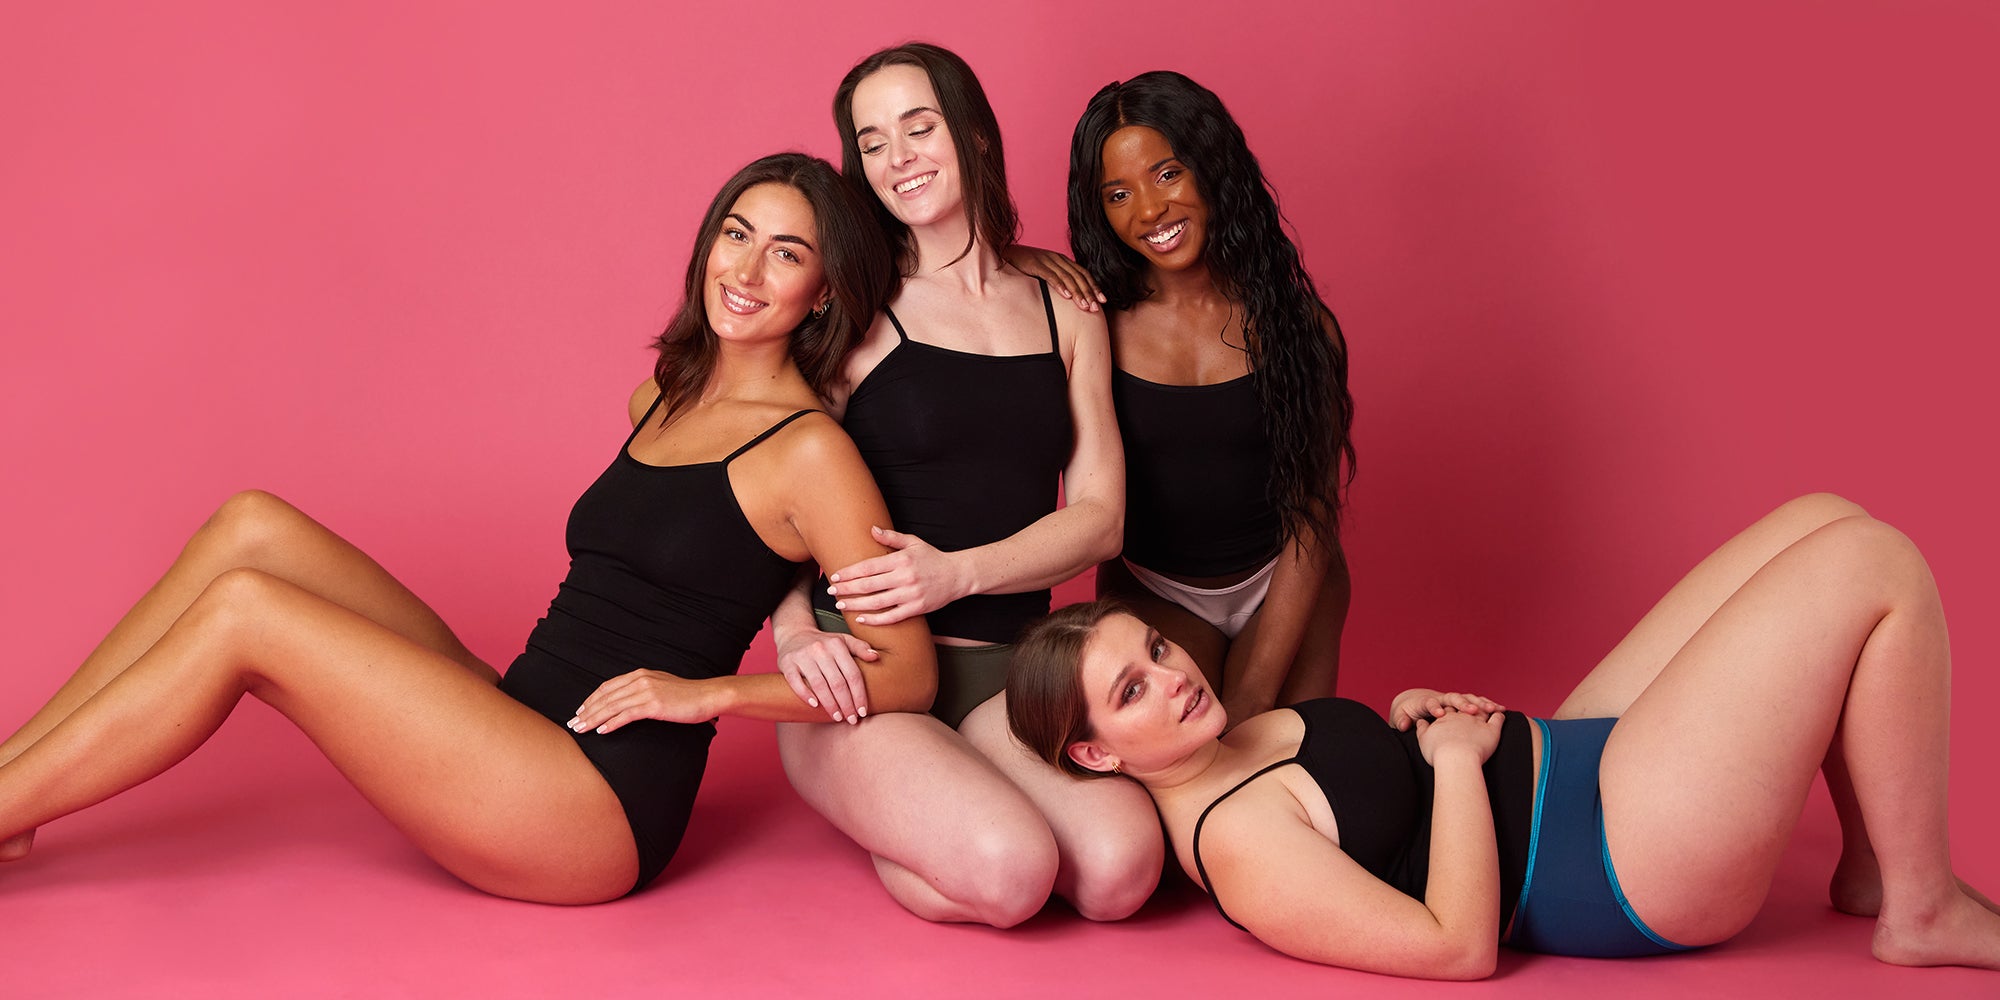 4 models in period pants for the blog Endometriosis Awareness Month